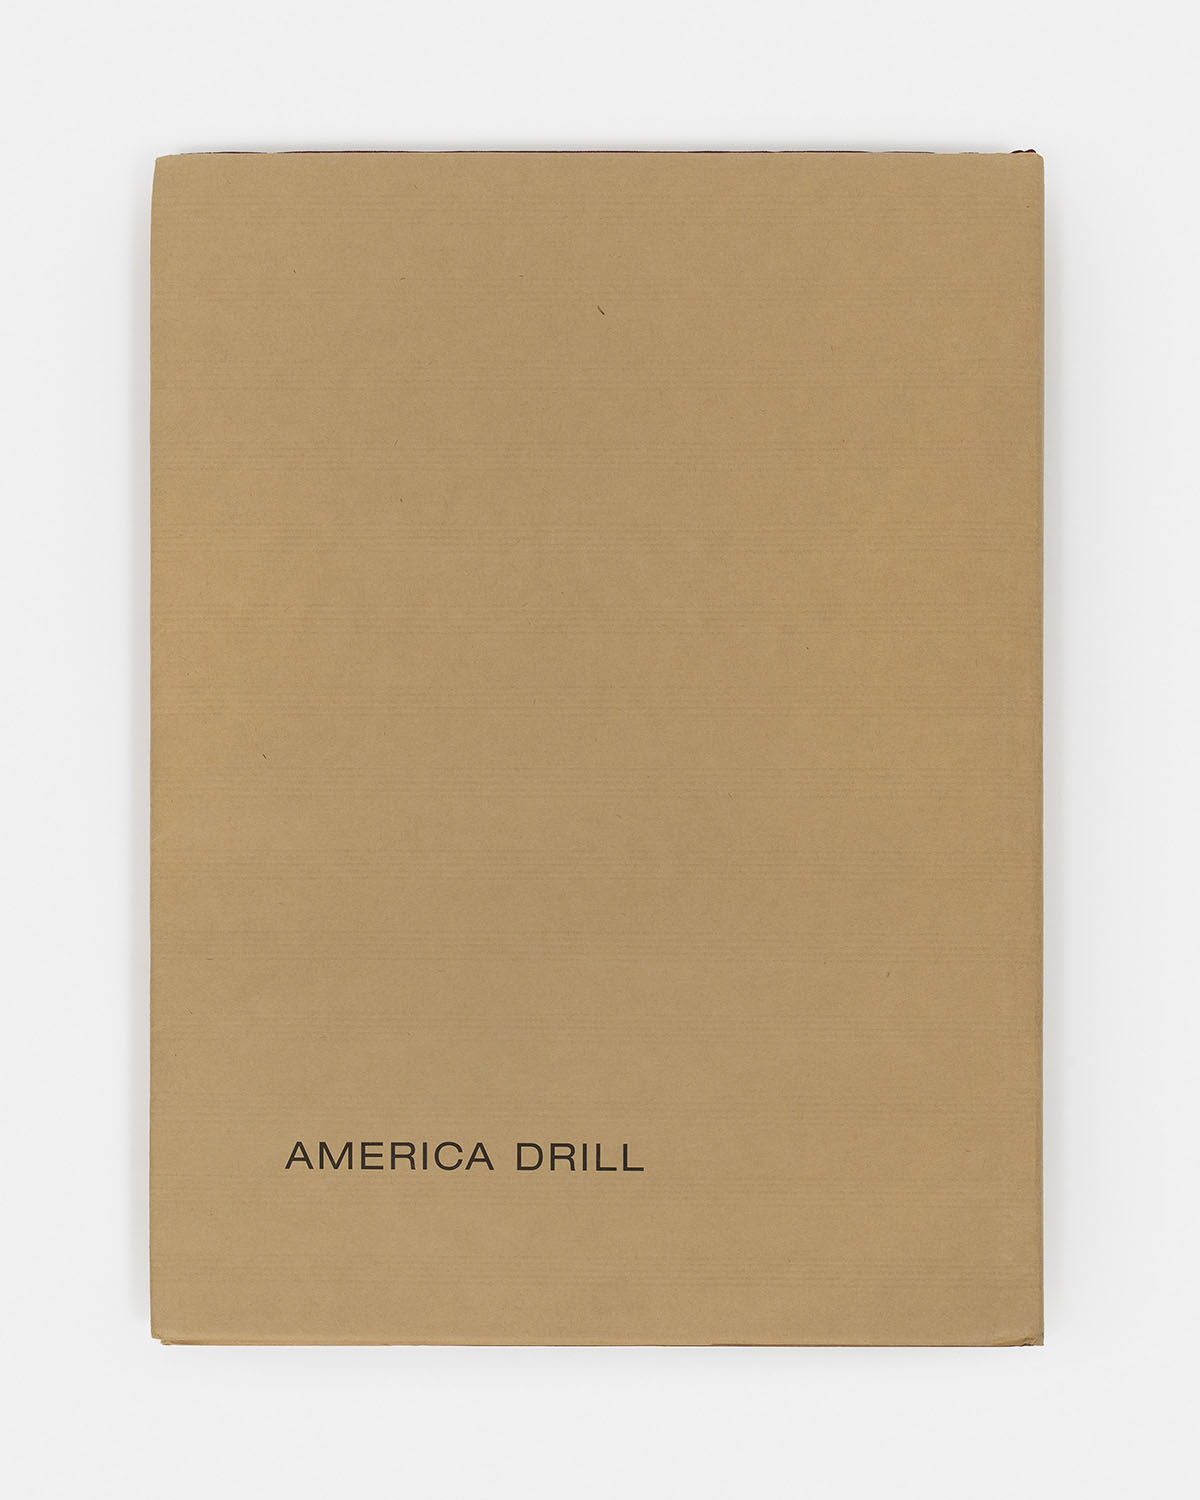 America Drill, 1963/2003 - Vue suppl&eacute;mentaire